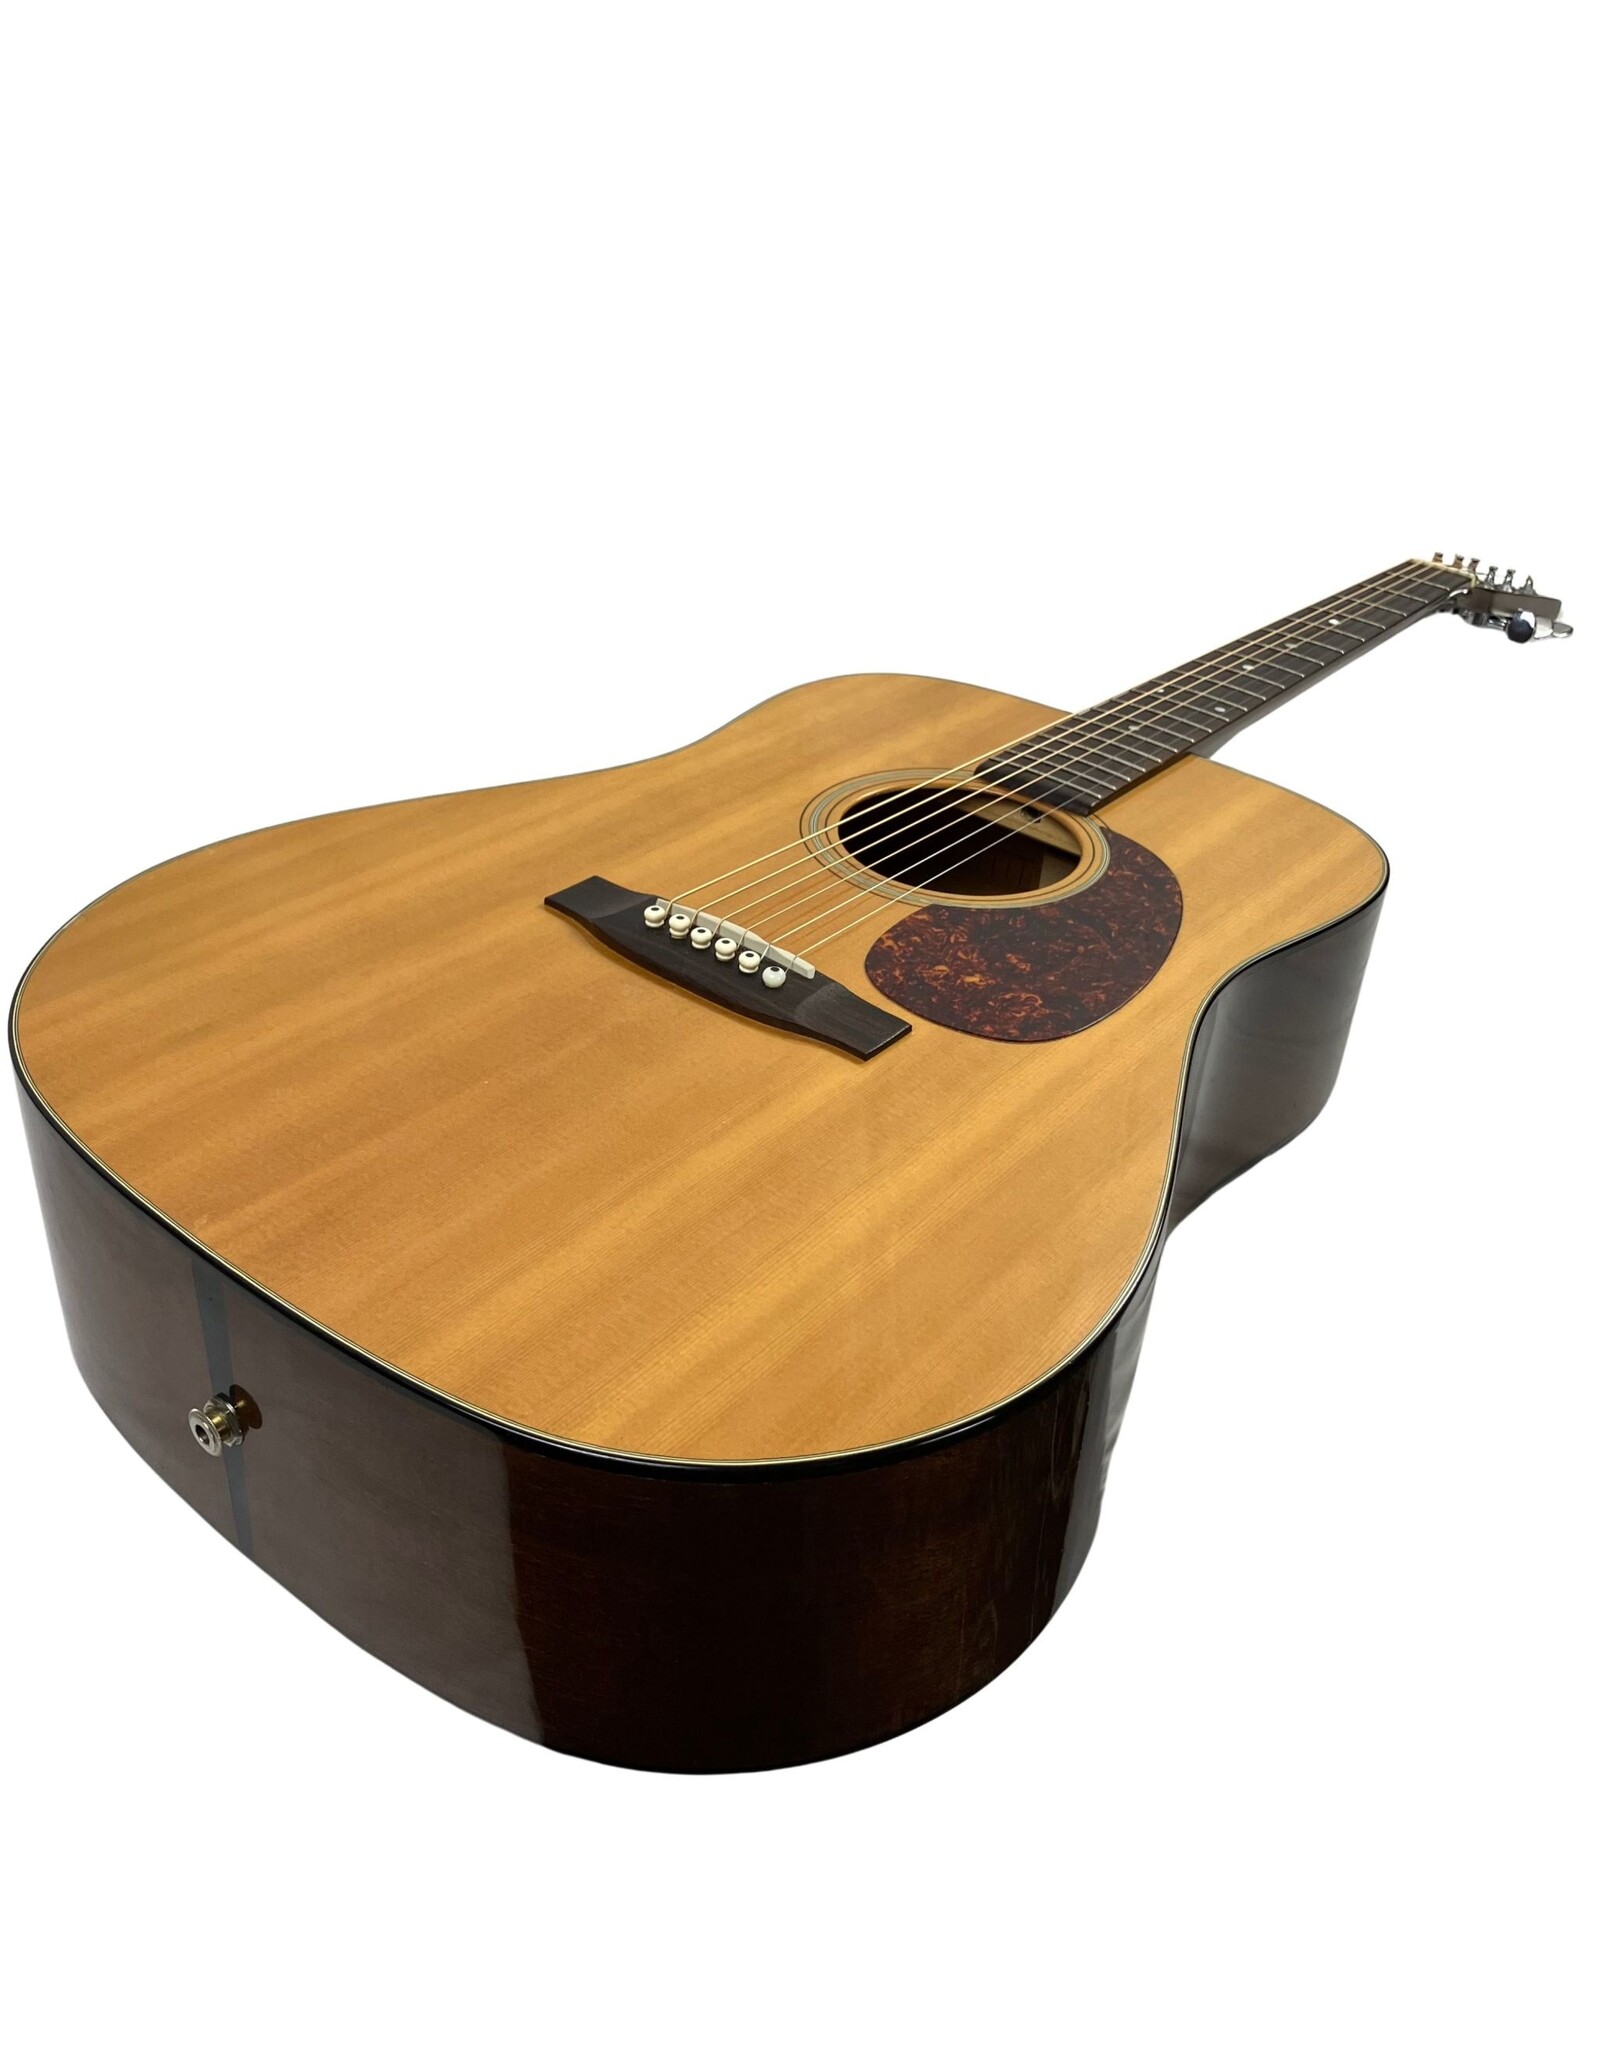 C. F. Martin & Co. Martin Shenandoah D1832 Dreadnaught Acoustic Guitar 1988-1989 (Used)